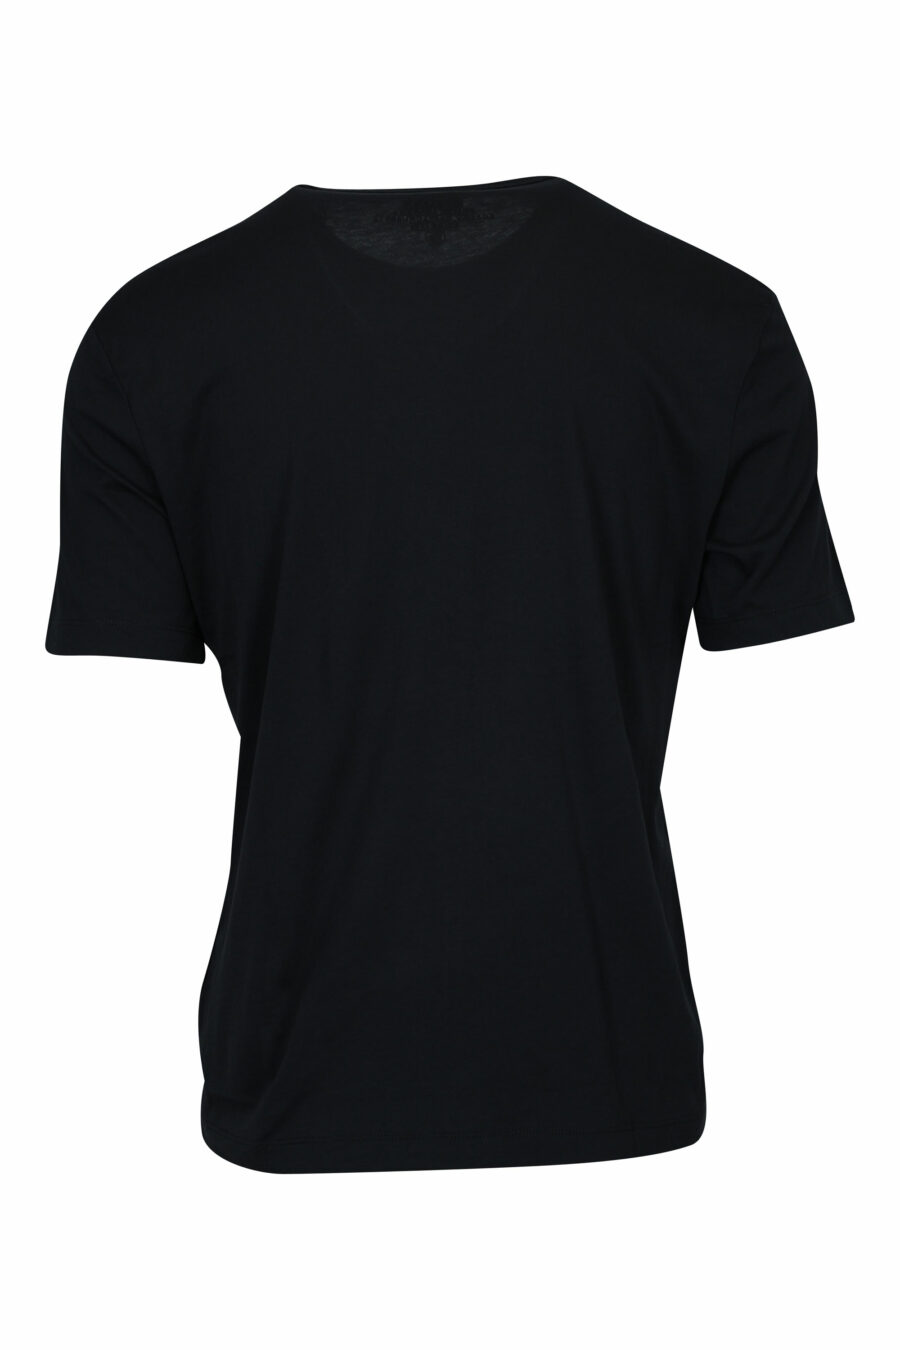 T-shirt noir avec logo carré "spray" - 8058610800086 1